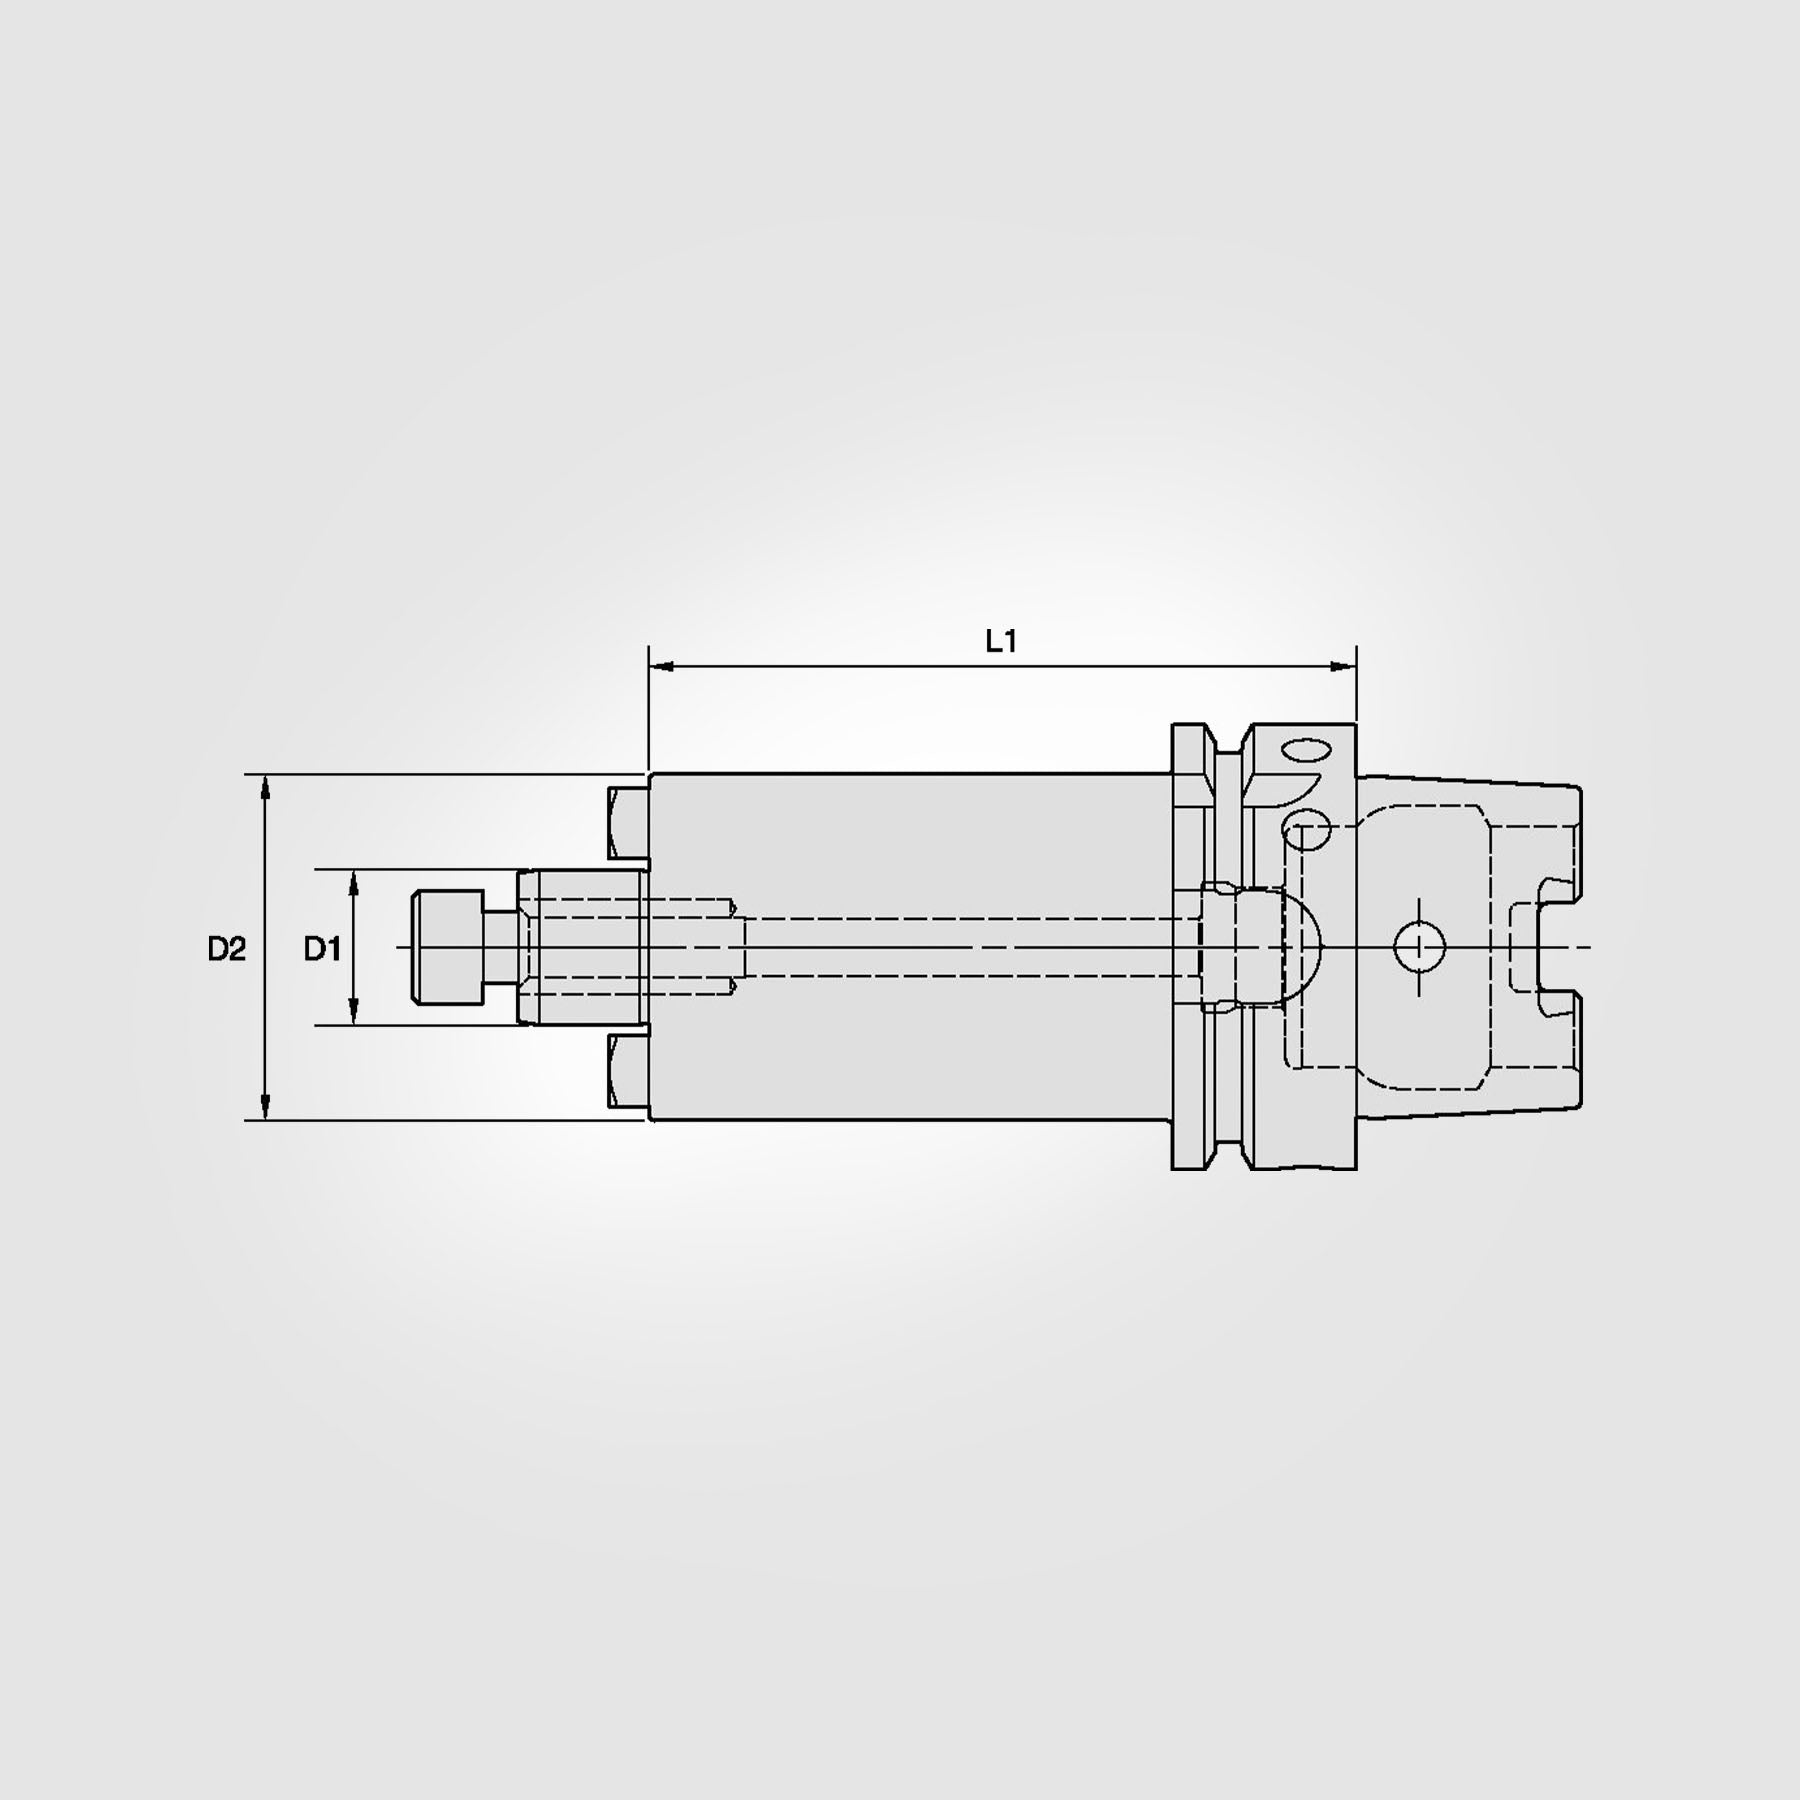 HSK100A Taper Shank 27mm Shell Mill Adapter (THROUGH COOLANT) | 3872503